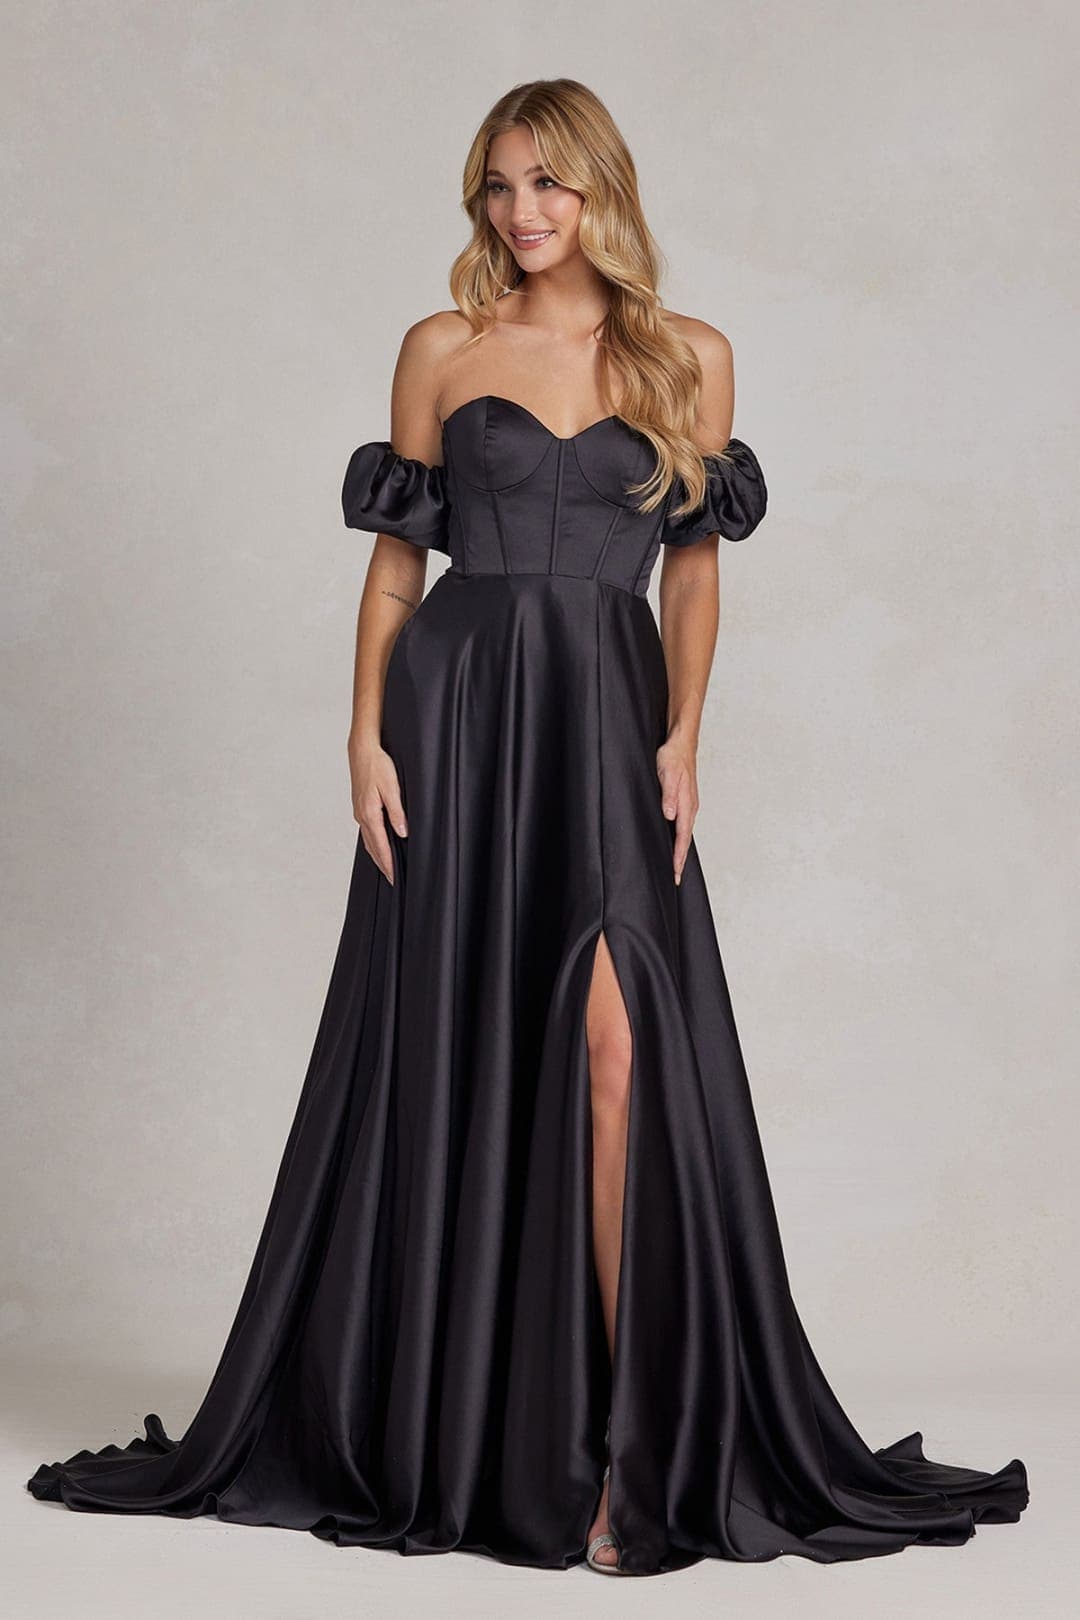 Simple Formal Gown - BLACK / 00